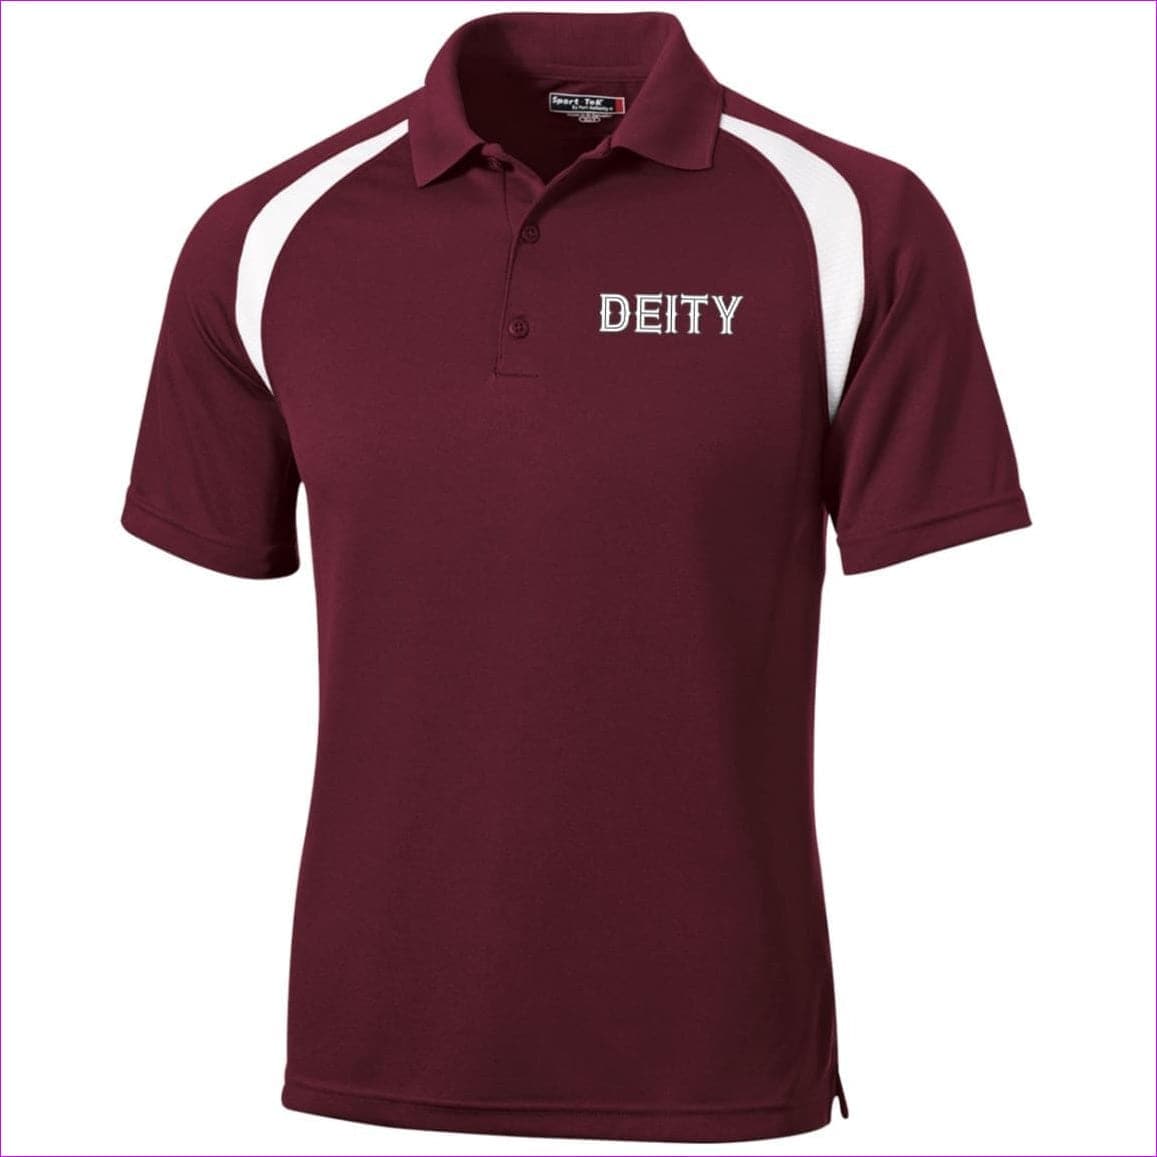 Maroon/White - Deity Moisture-Wicking Golf Shirt - Mens Polo Shirts at TFC&H Co.